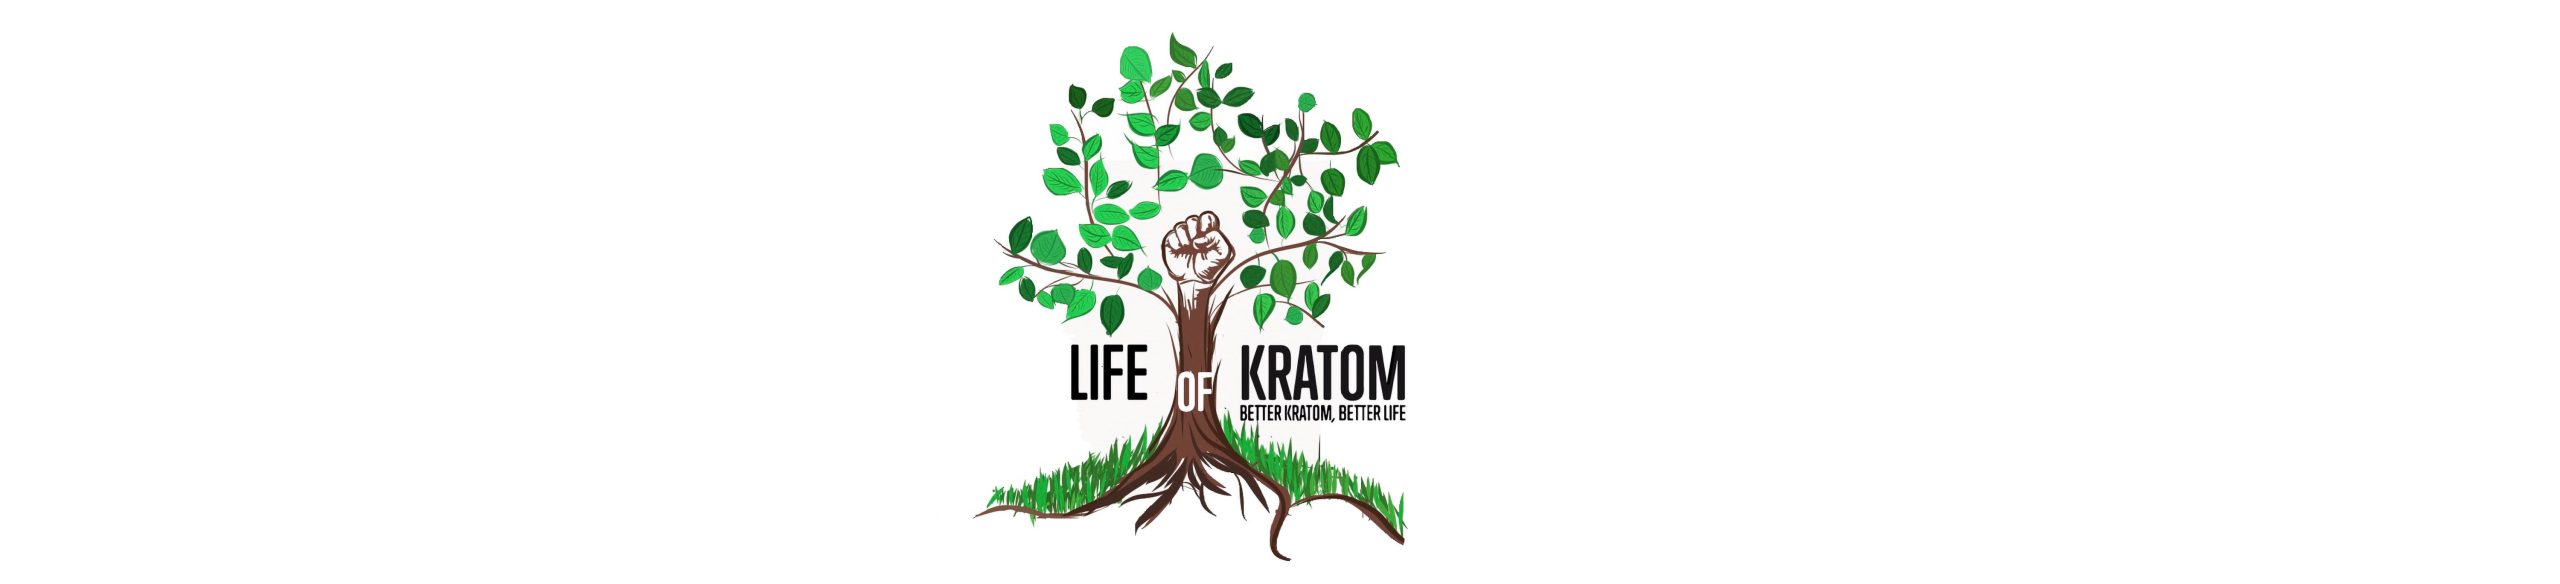 image of life of kratom